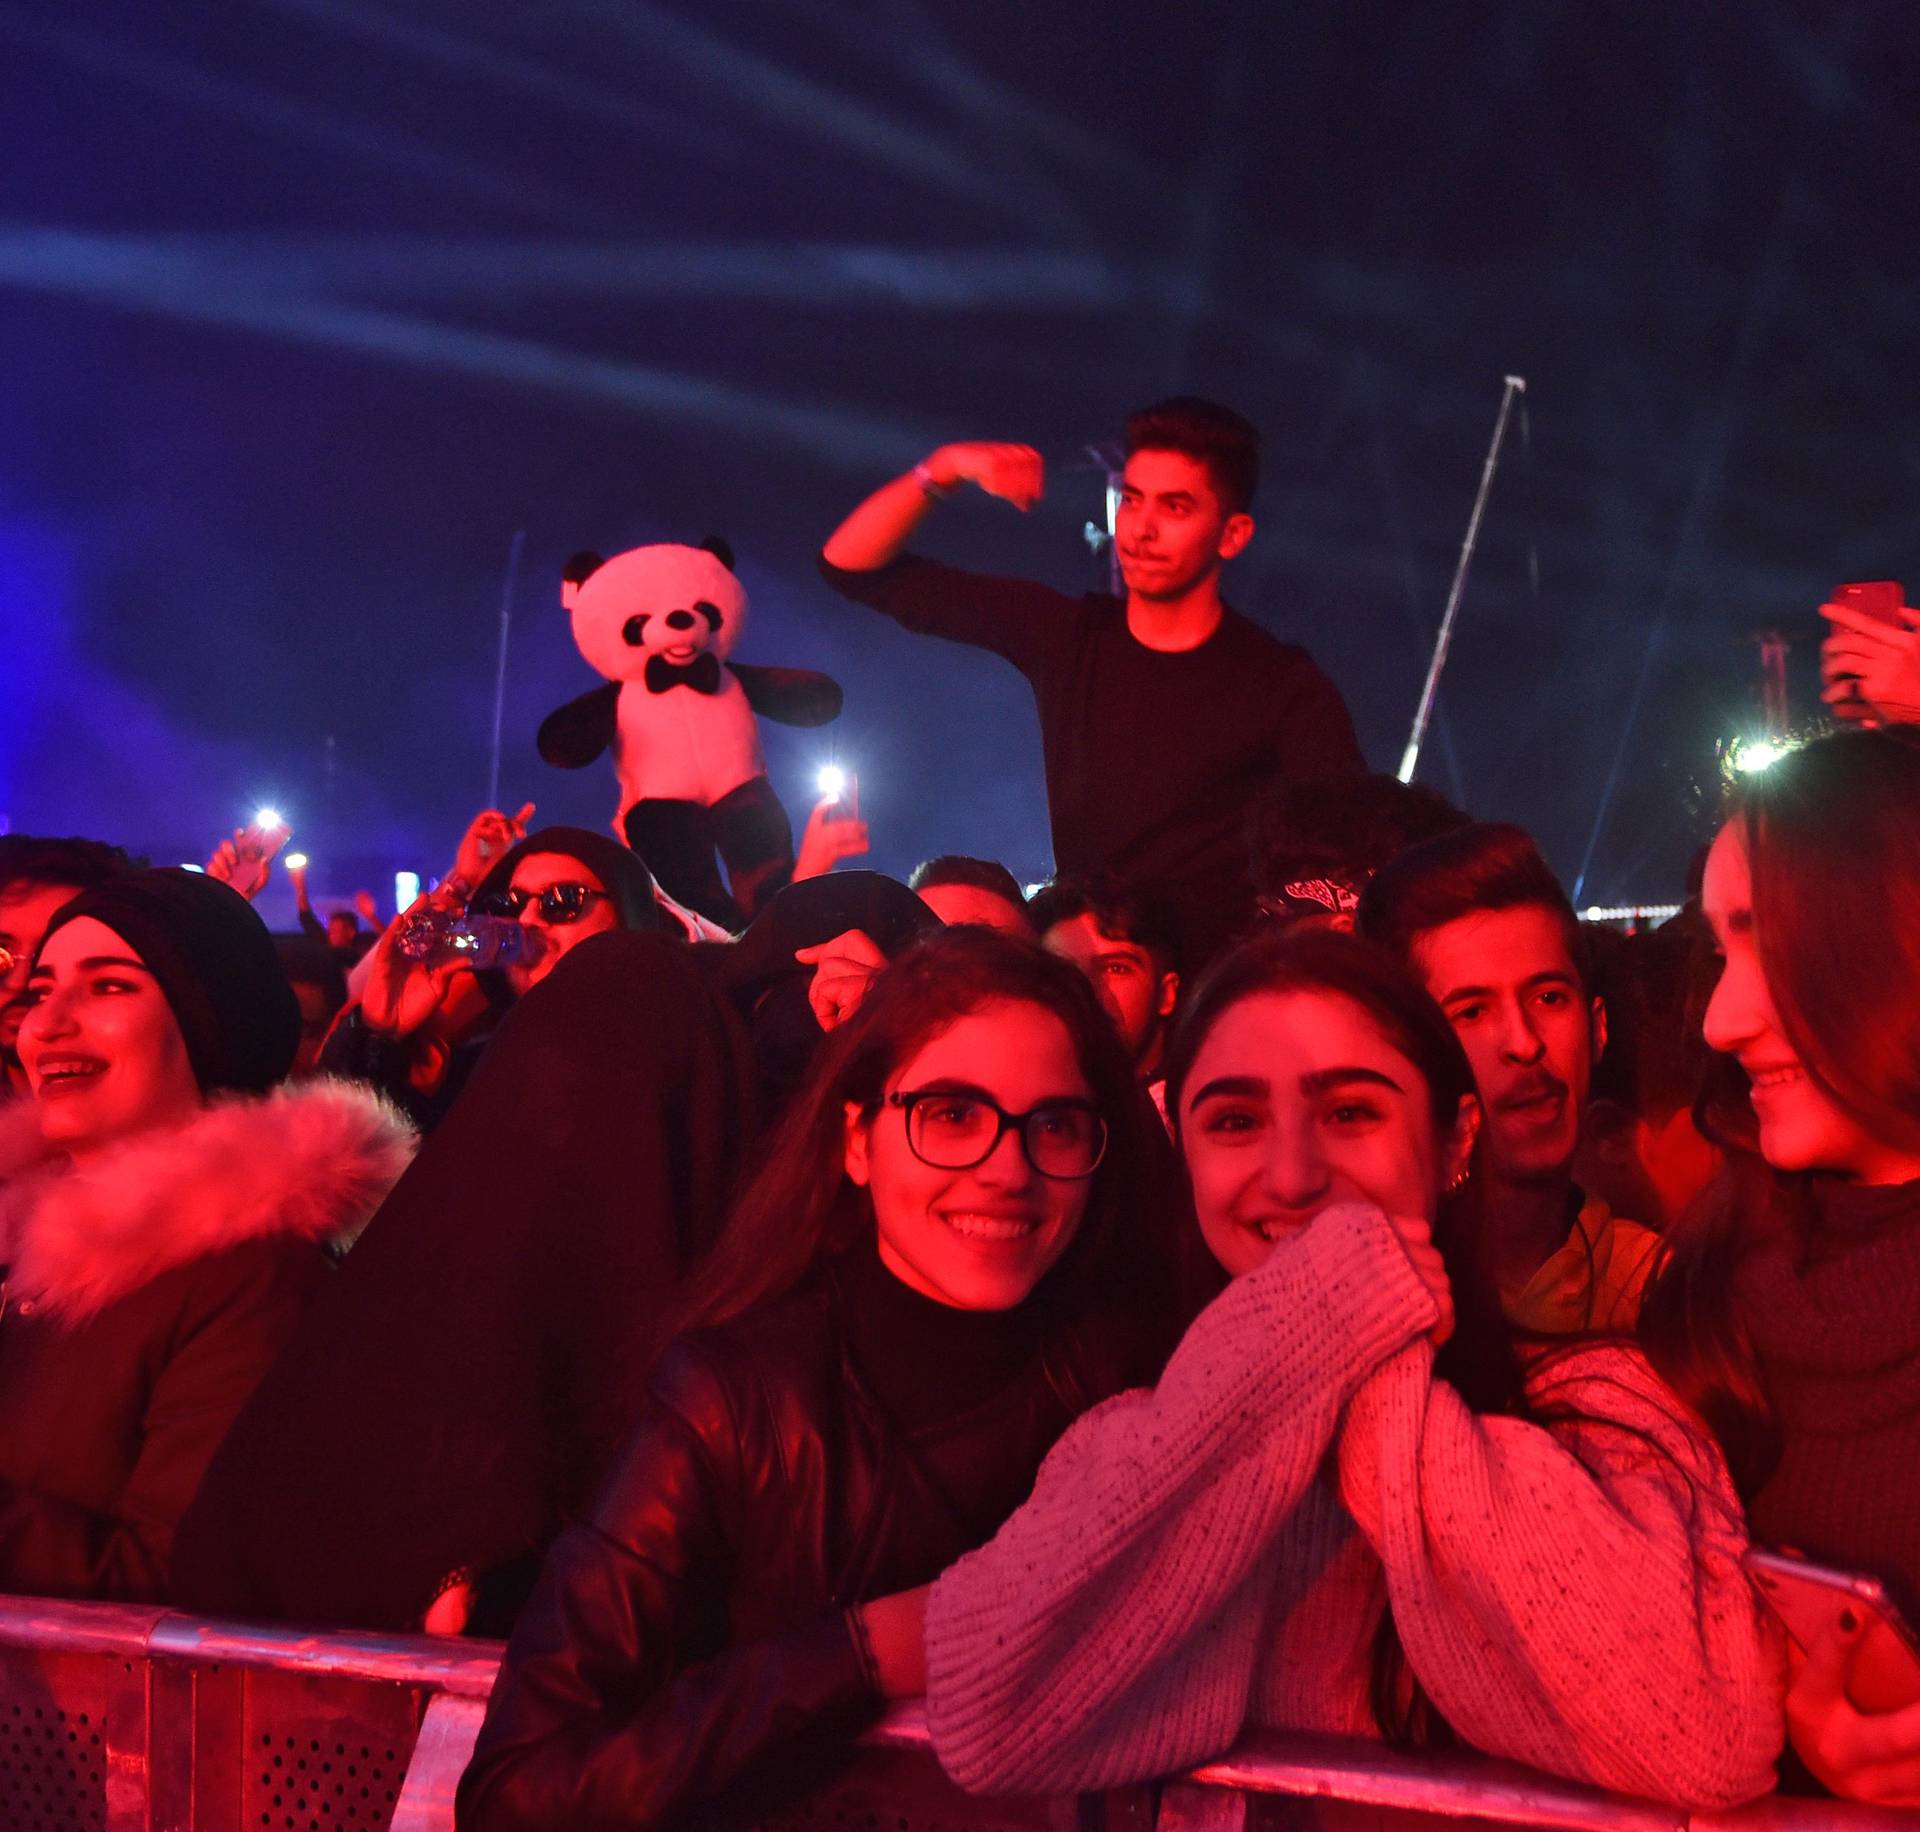 Saudi fans attend MDLBeast, an electronic music festival held in Banban, Riyadh, Saudi Arabia in 2019